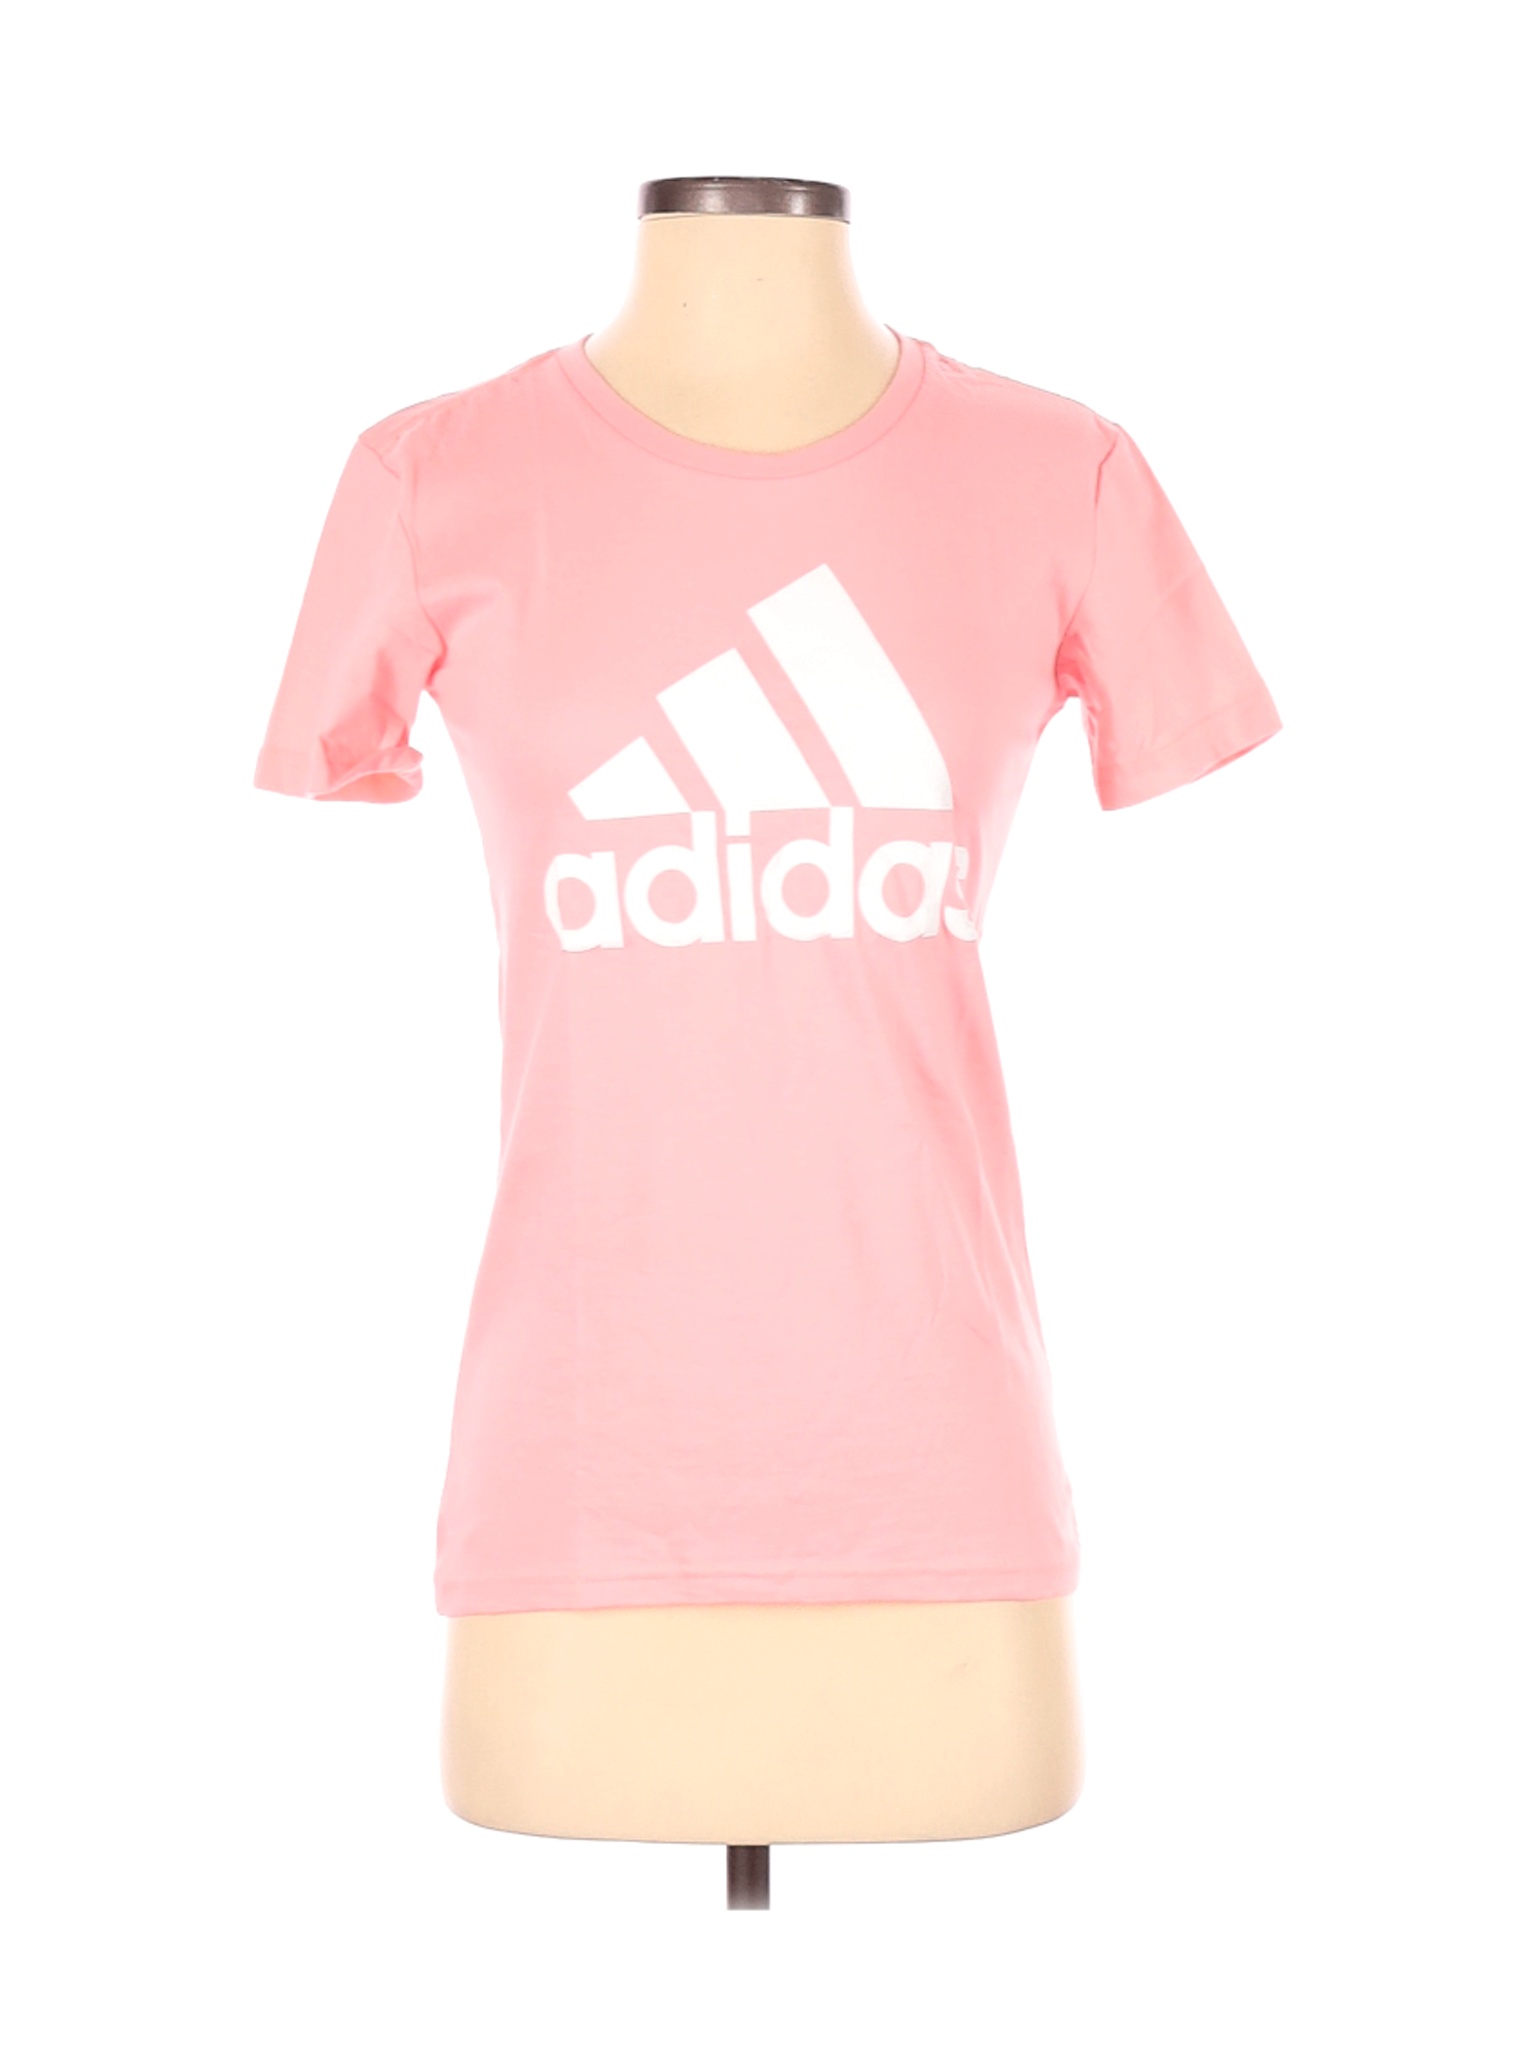 NWT Adidas Women Pink Short Sleeve T-Shirt XS | eBay